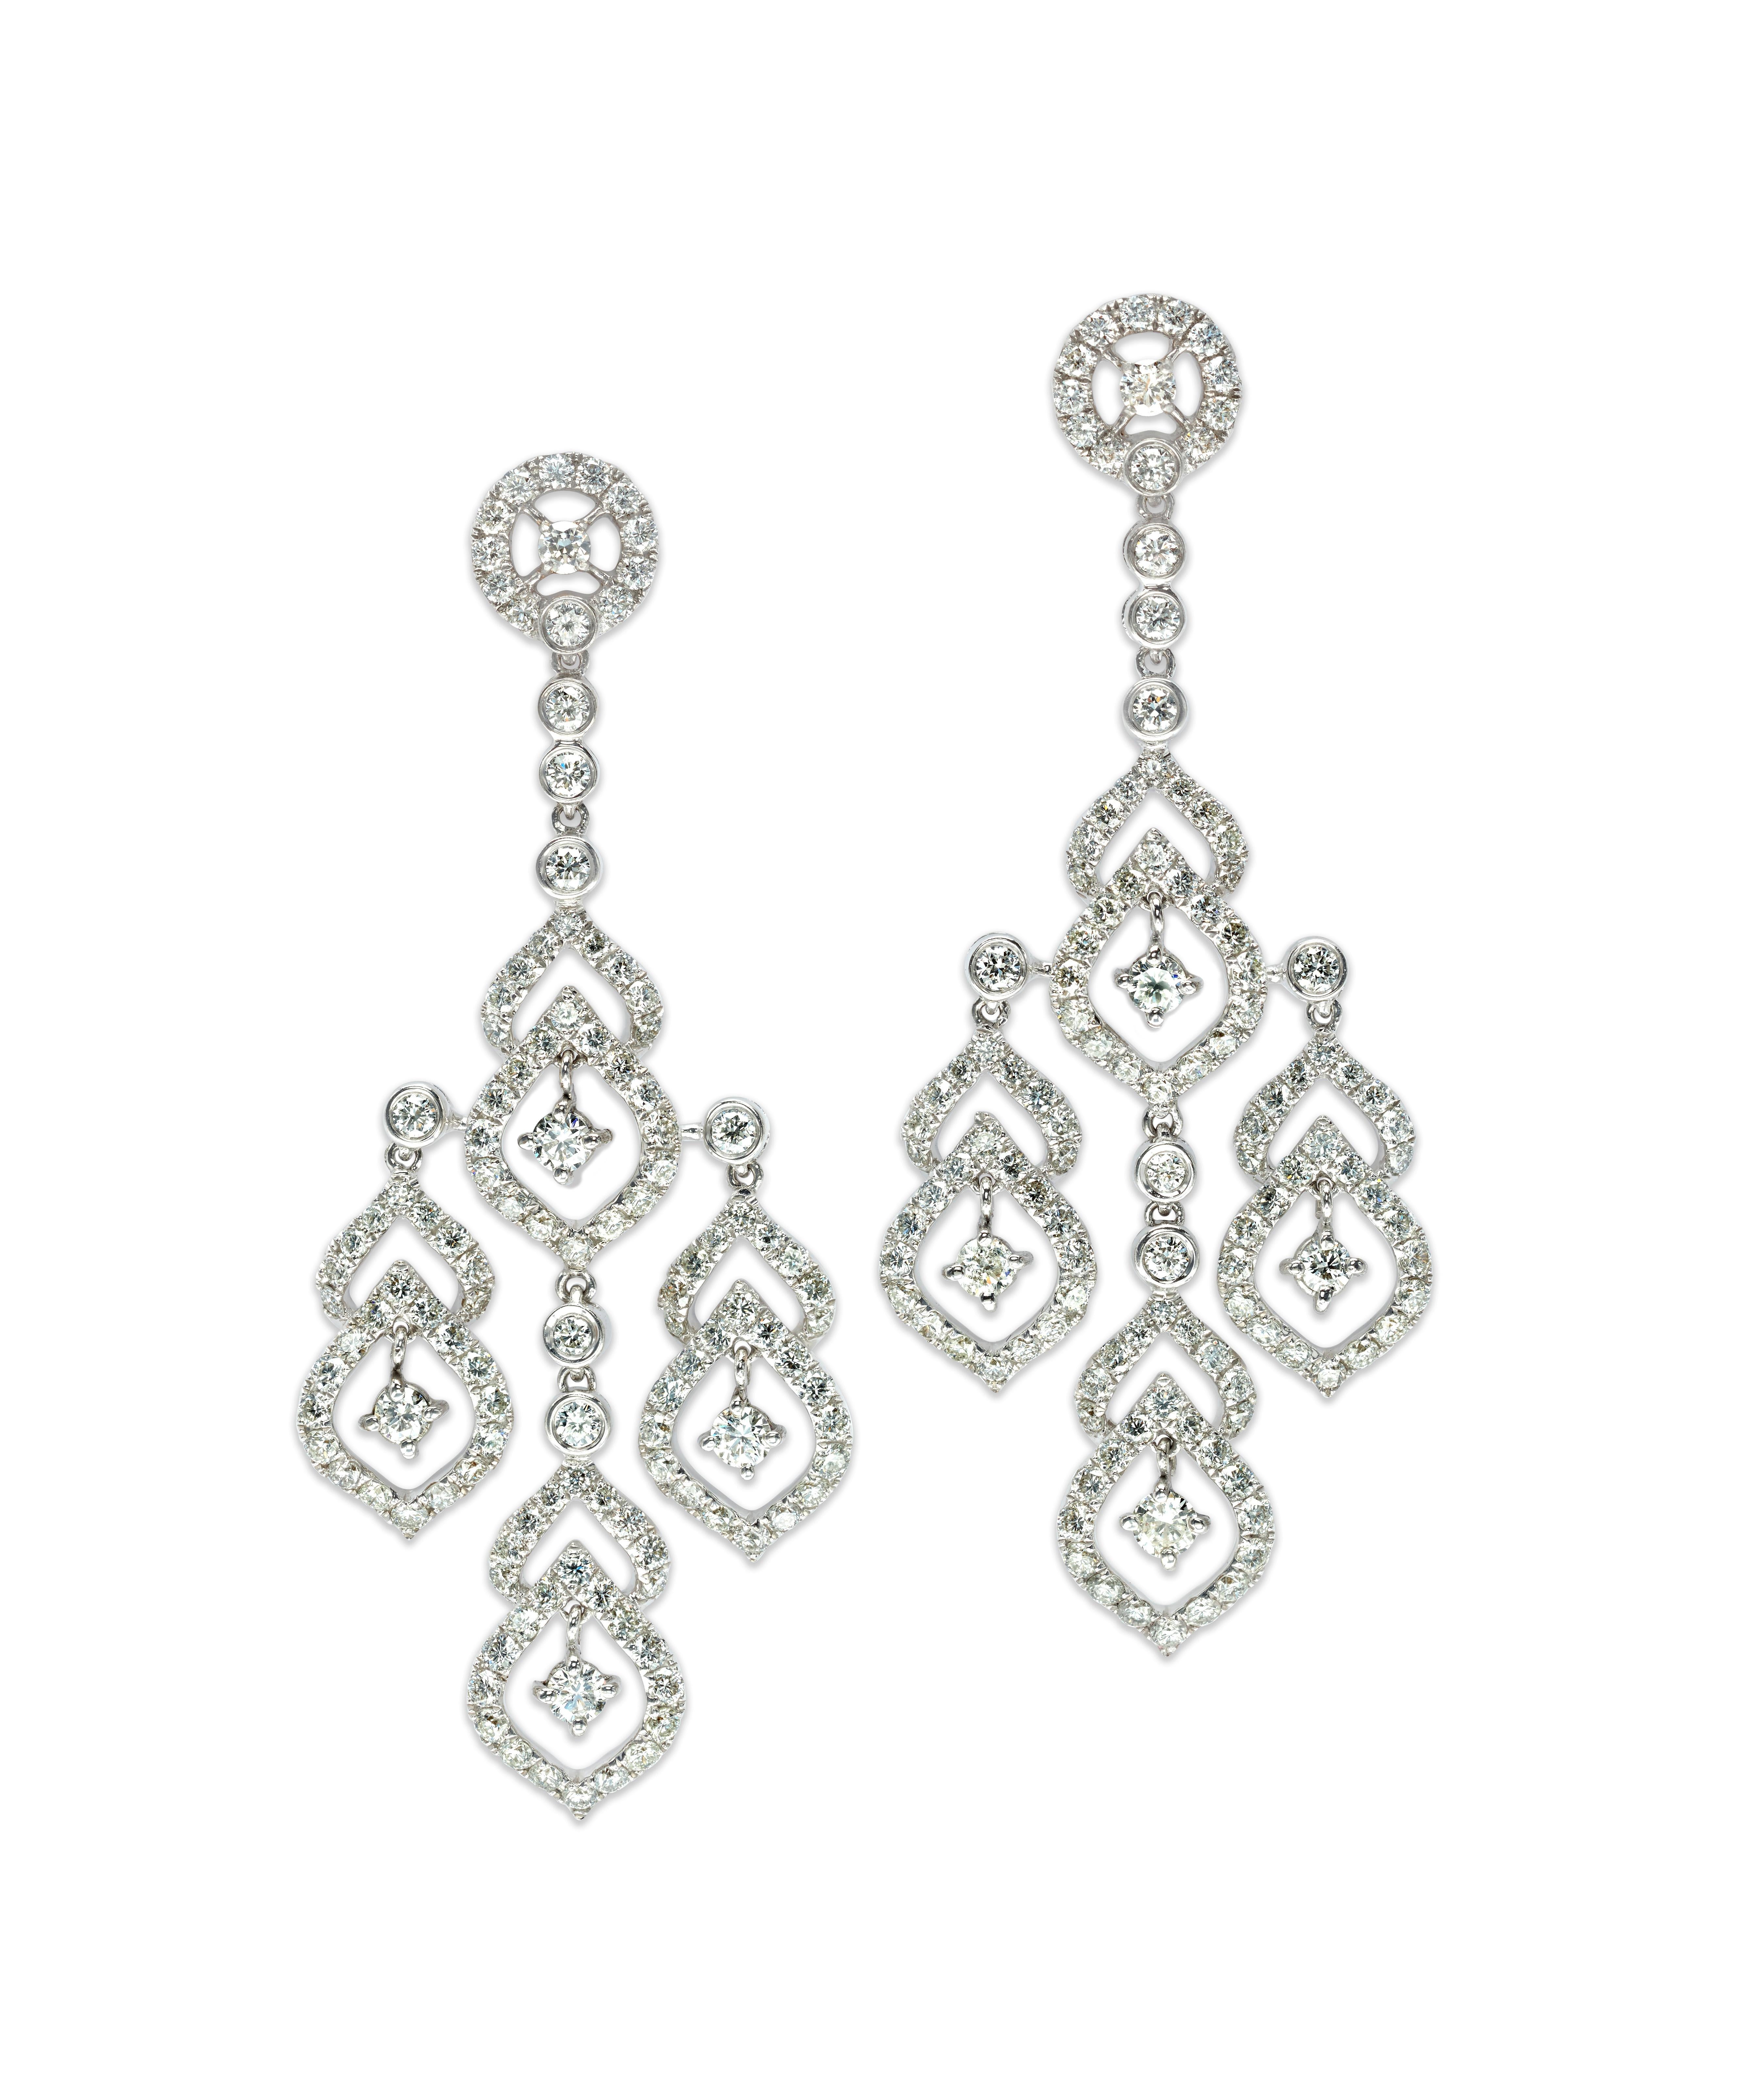 Contemporary 6.52 Carat Diamond Chandelier Earrings